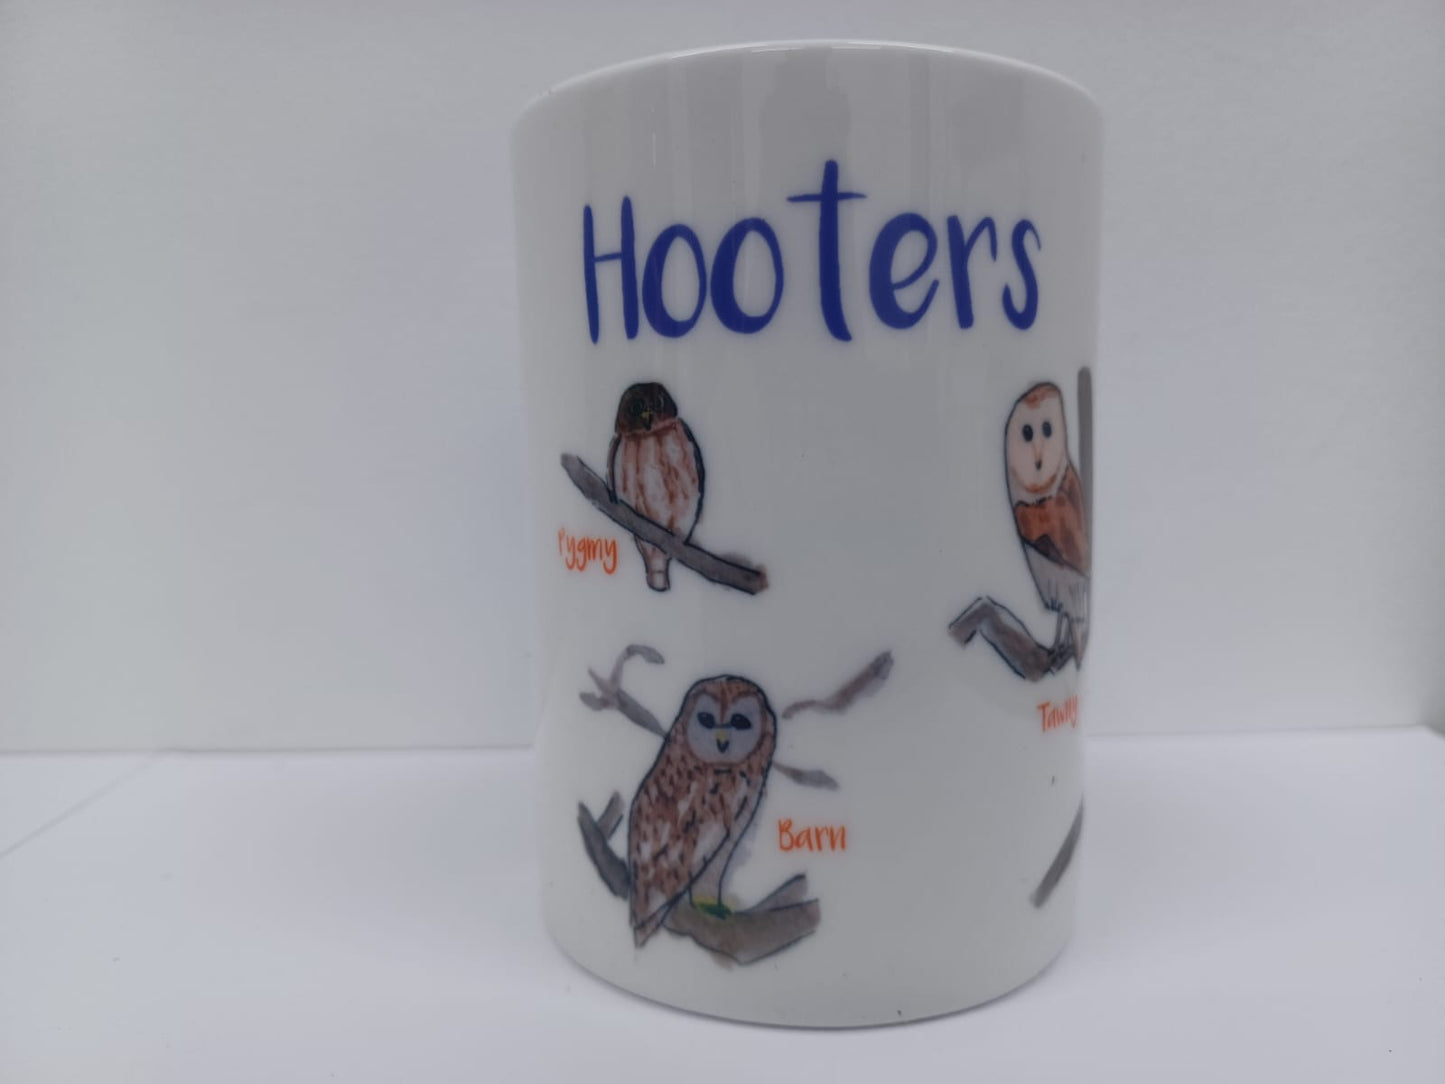 Bird variety cup